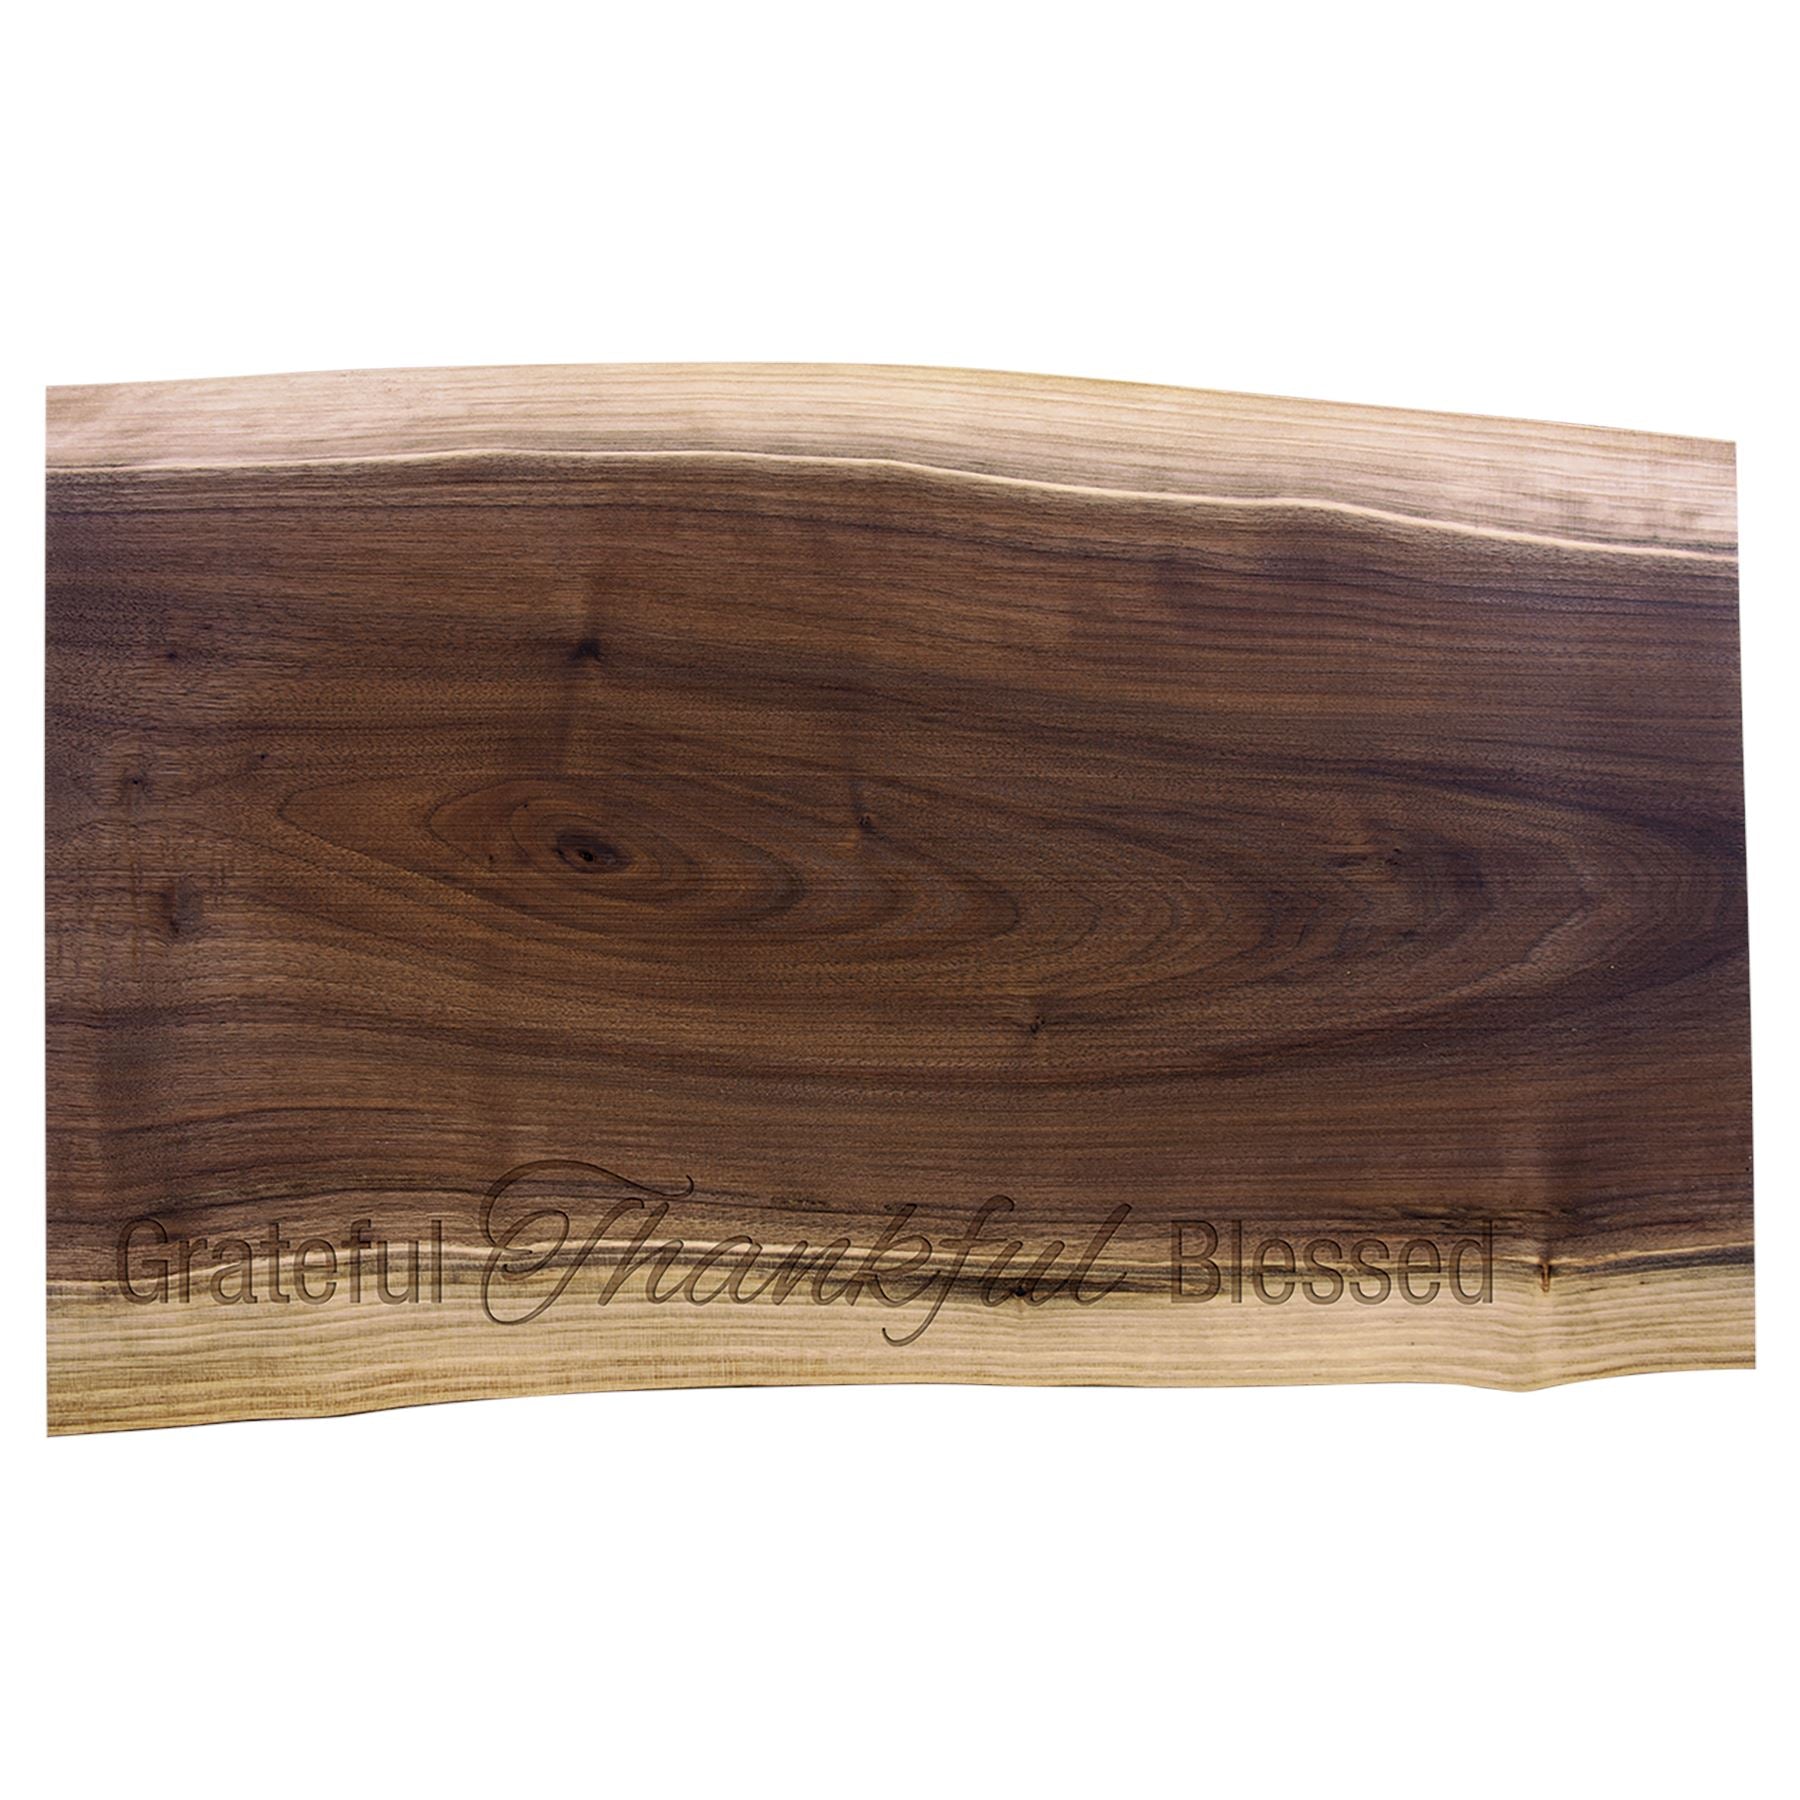 Black Walnut Cutting and Charcuterie Board, 20" x 12", Laser Engraved Cutting Board Craftworks NW 